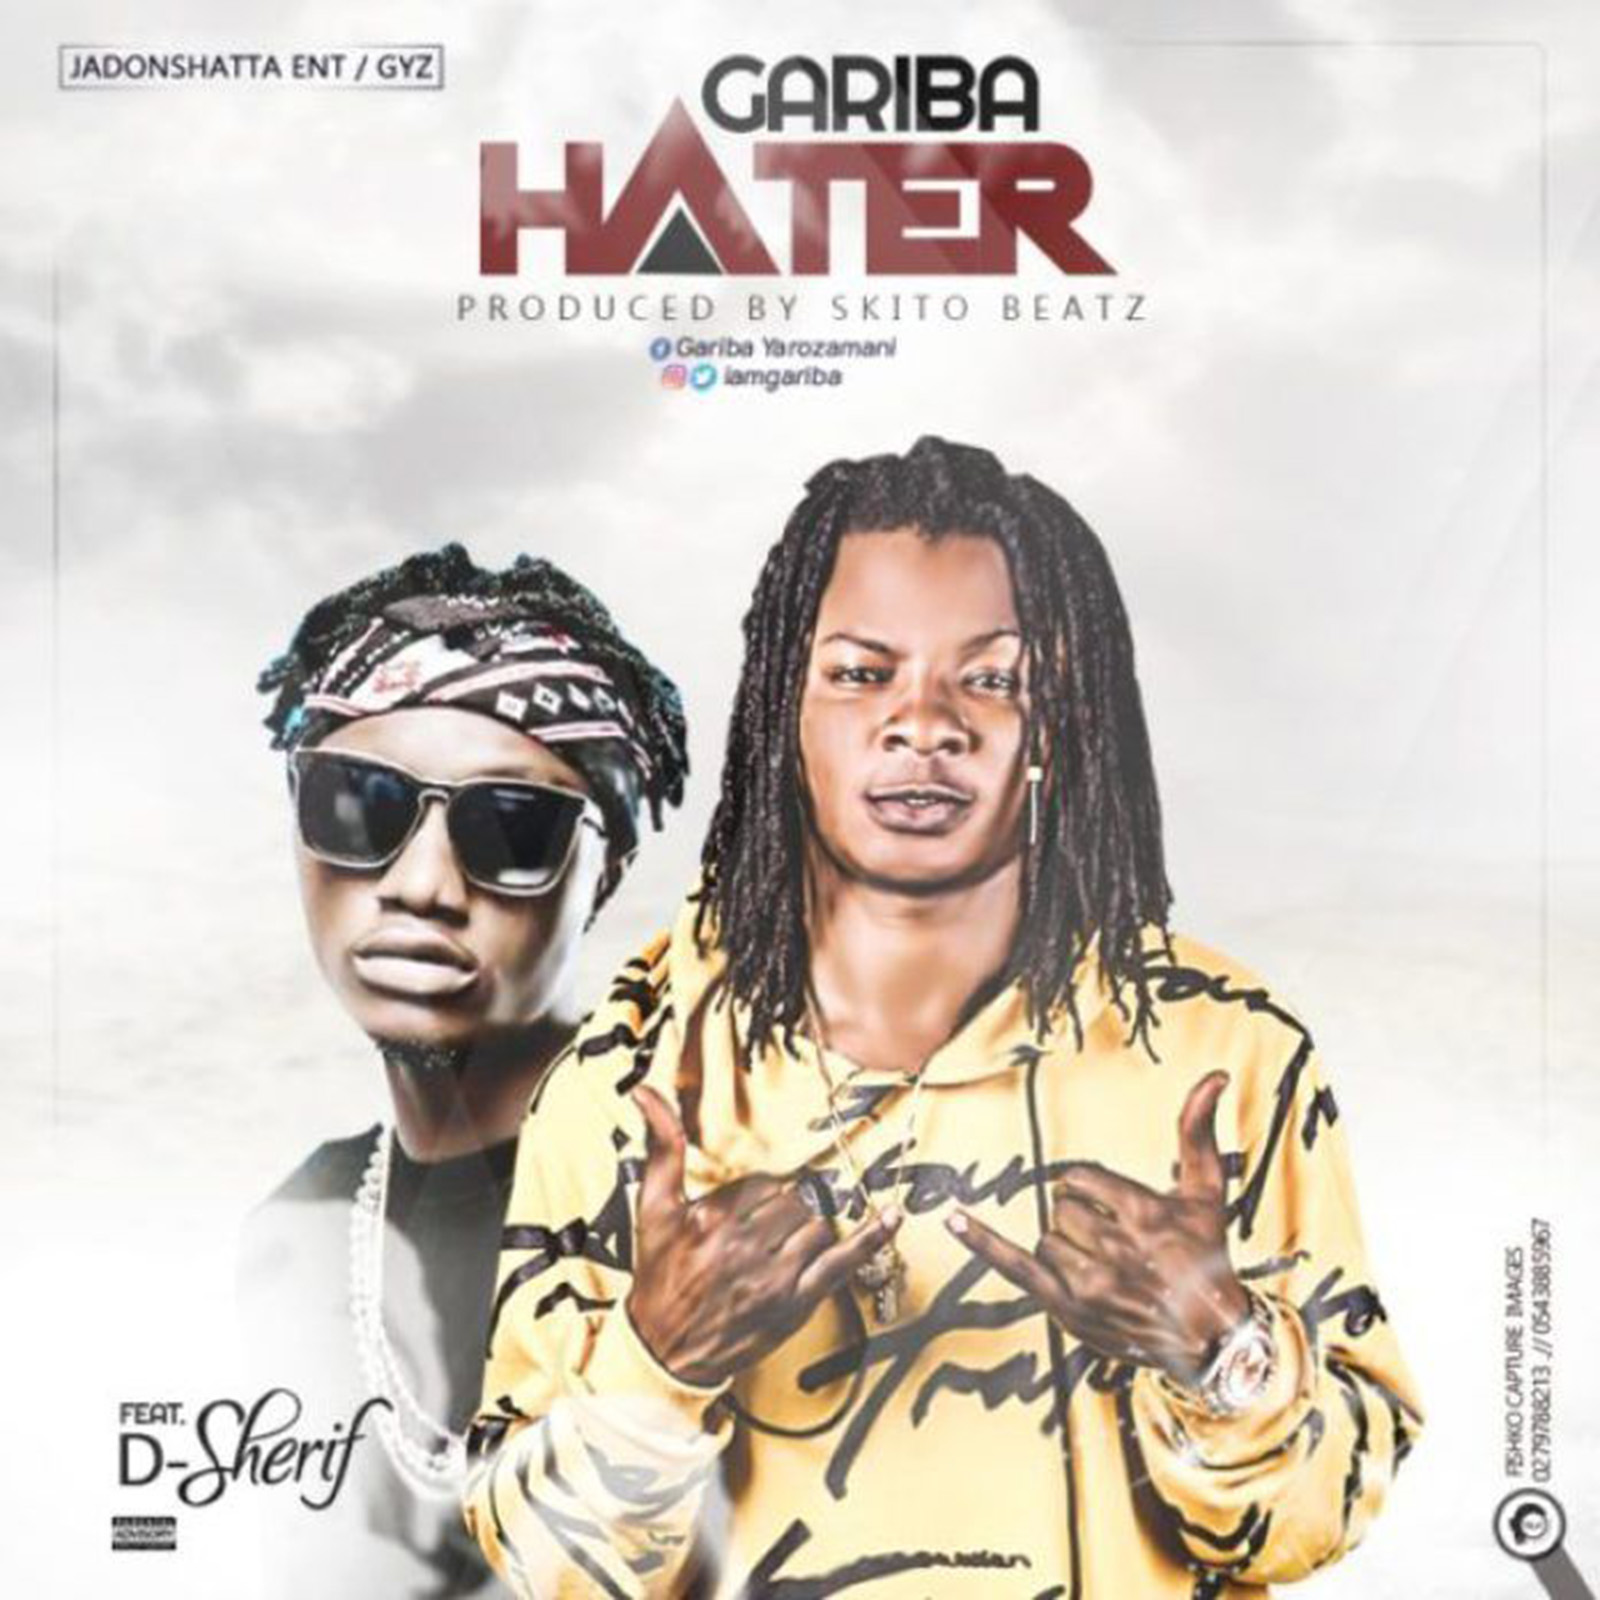 Hater by Gariba feat. D-Sherif